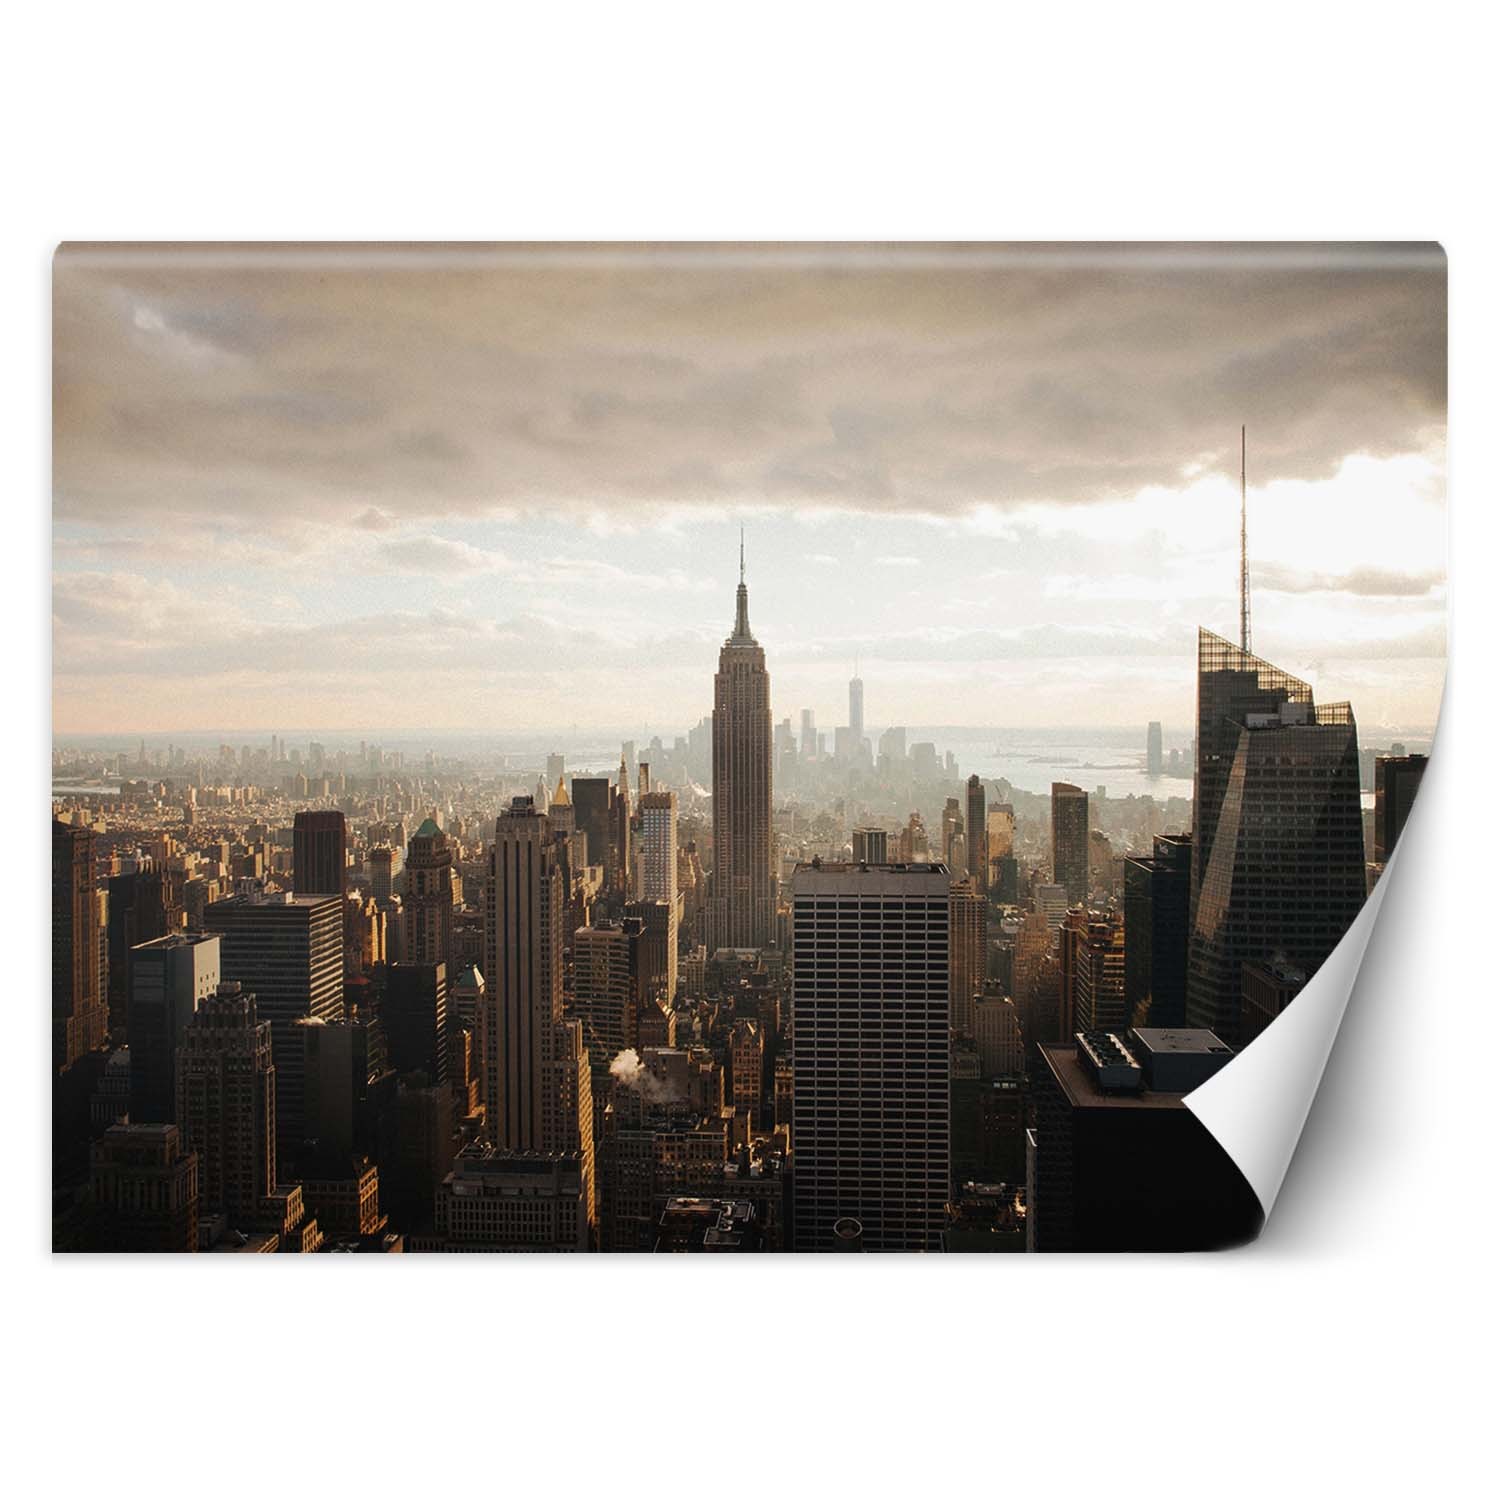 Trend24 – Behang – New York – Manhattan – Vliesbehang – Fotobehang – Behang Woonkamer – 450x315x2 cm – Incl. behanglijm